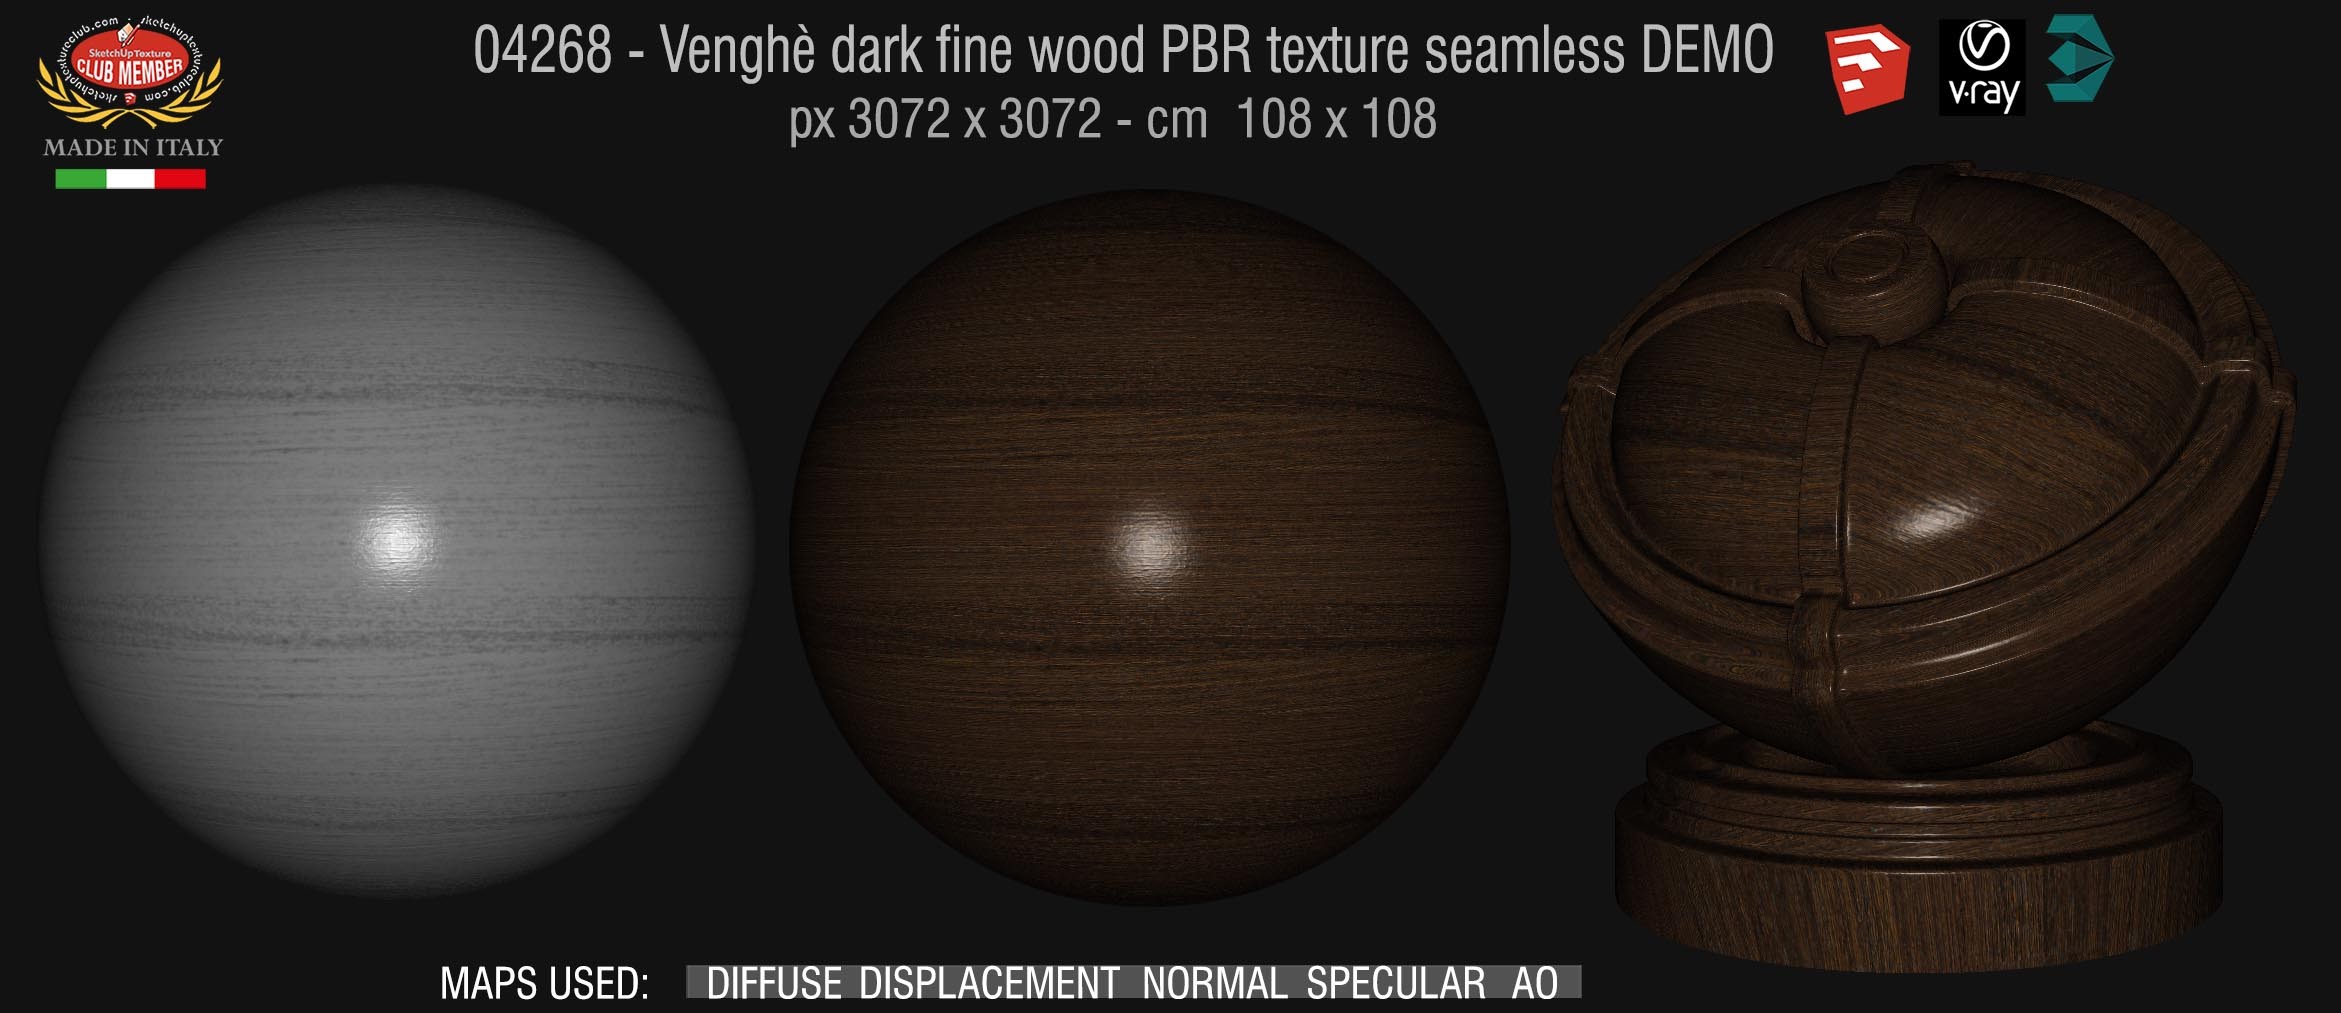 04268 Venghè dark fine wood PBR texture seamless DEMO